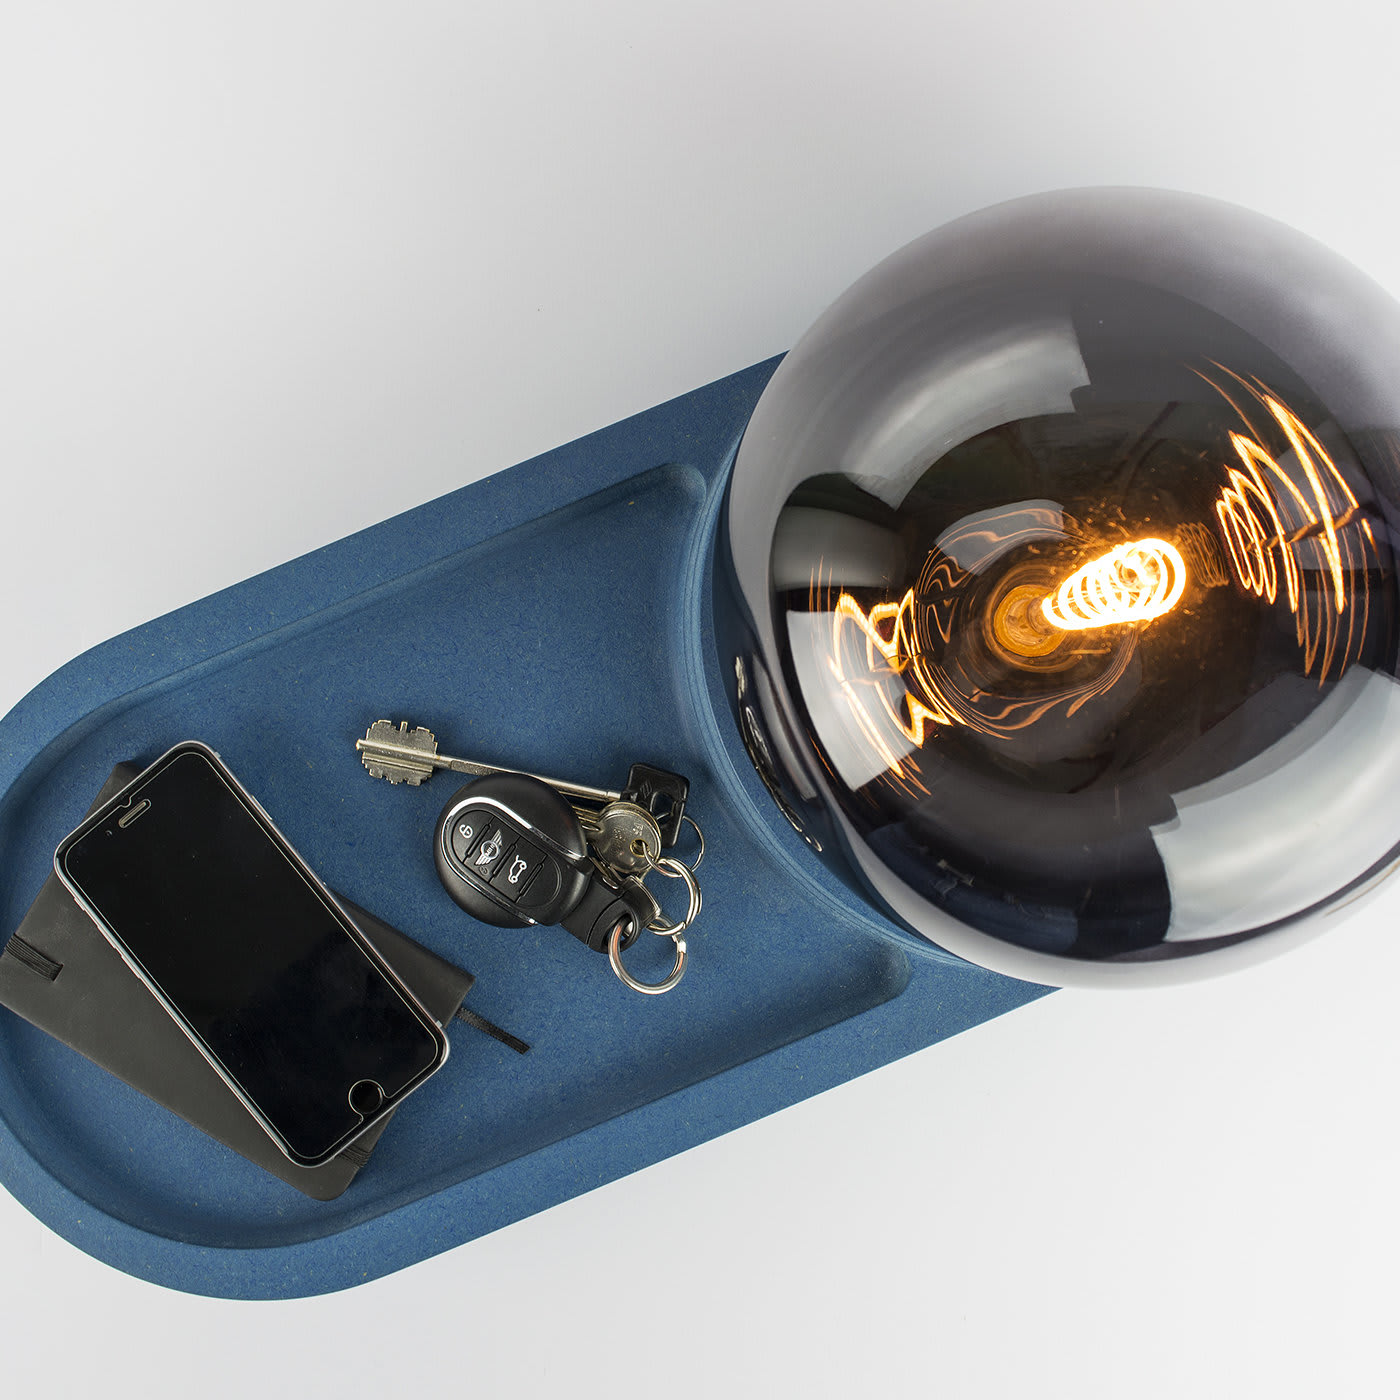 Vessel Blue Table Lamp by Alalda Design - Interia